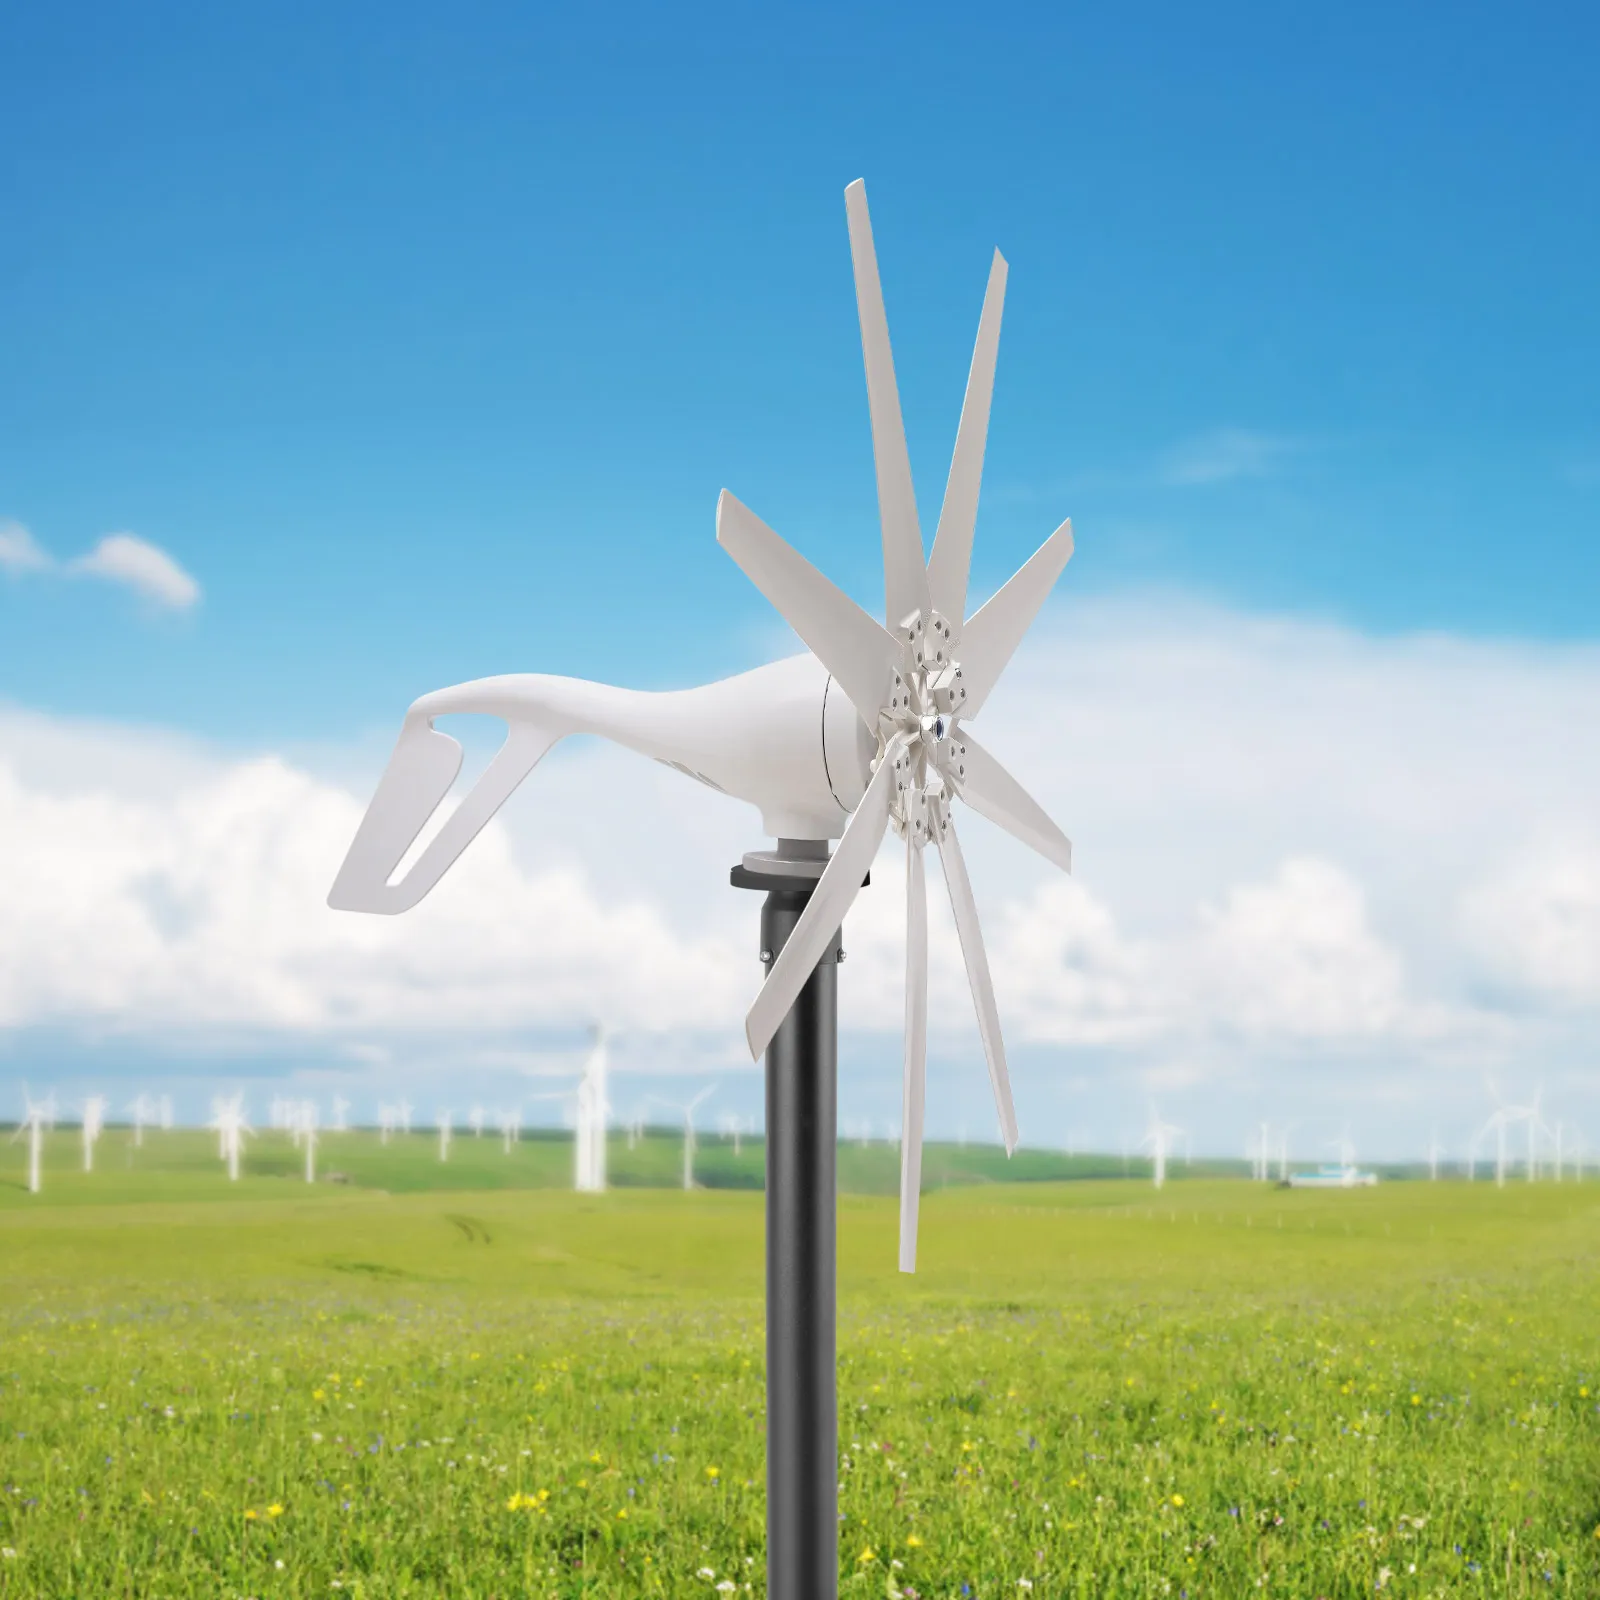 For Wind System 600W Wind Turbine Generator Kit + Charge Controller lightaling led light kit for 10268 vestas wind turbine